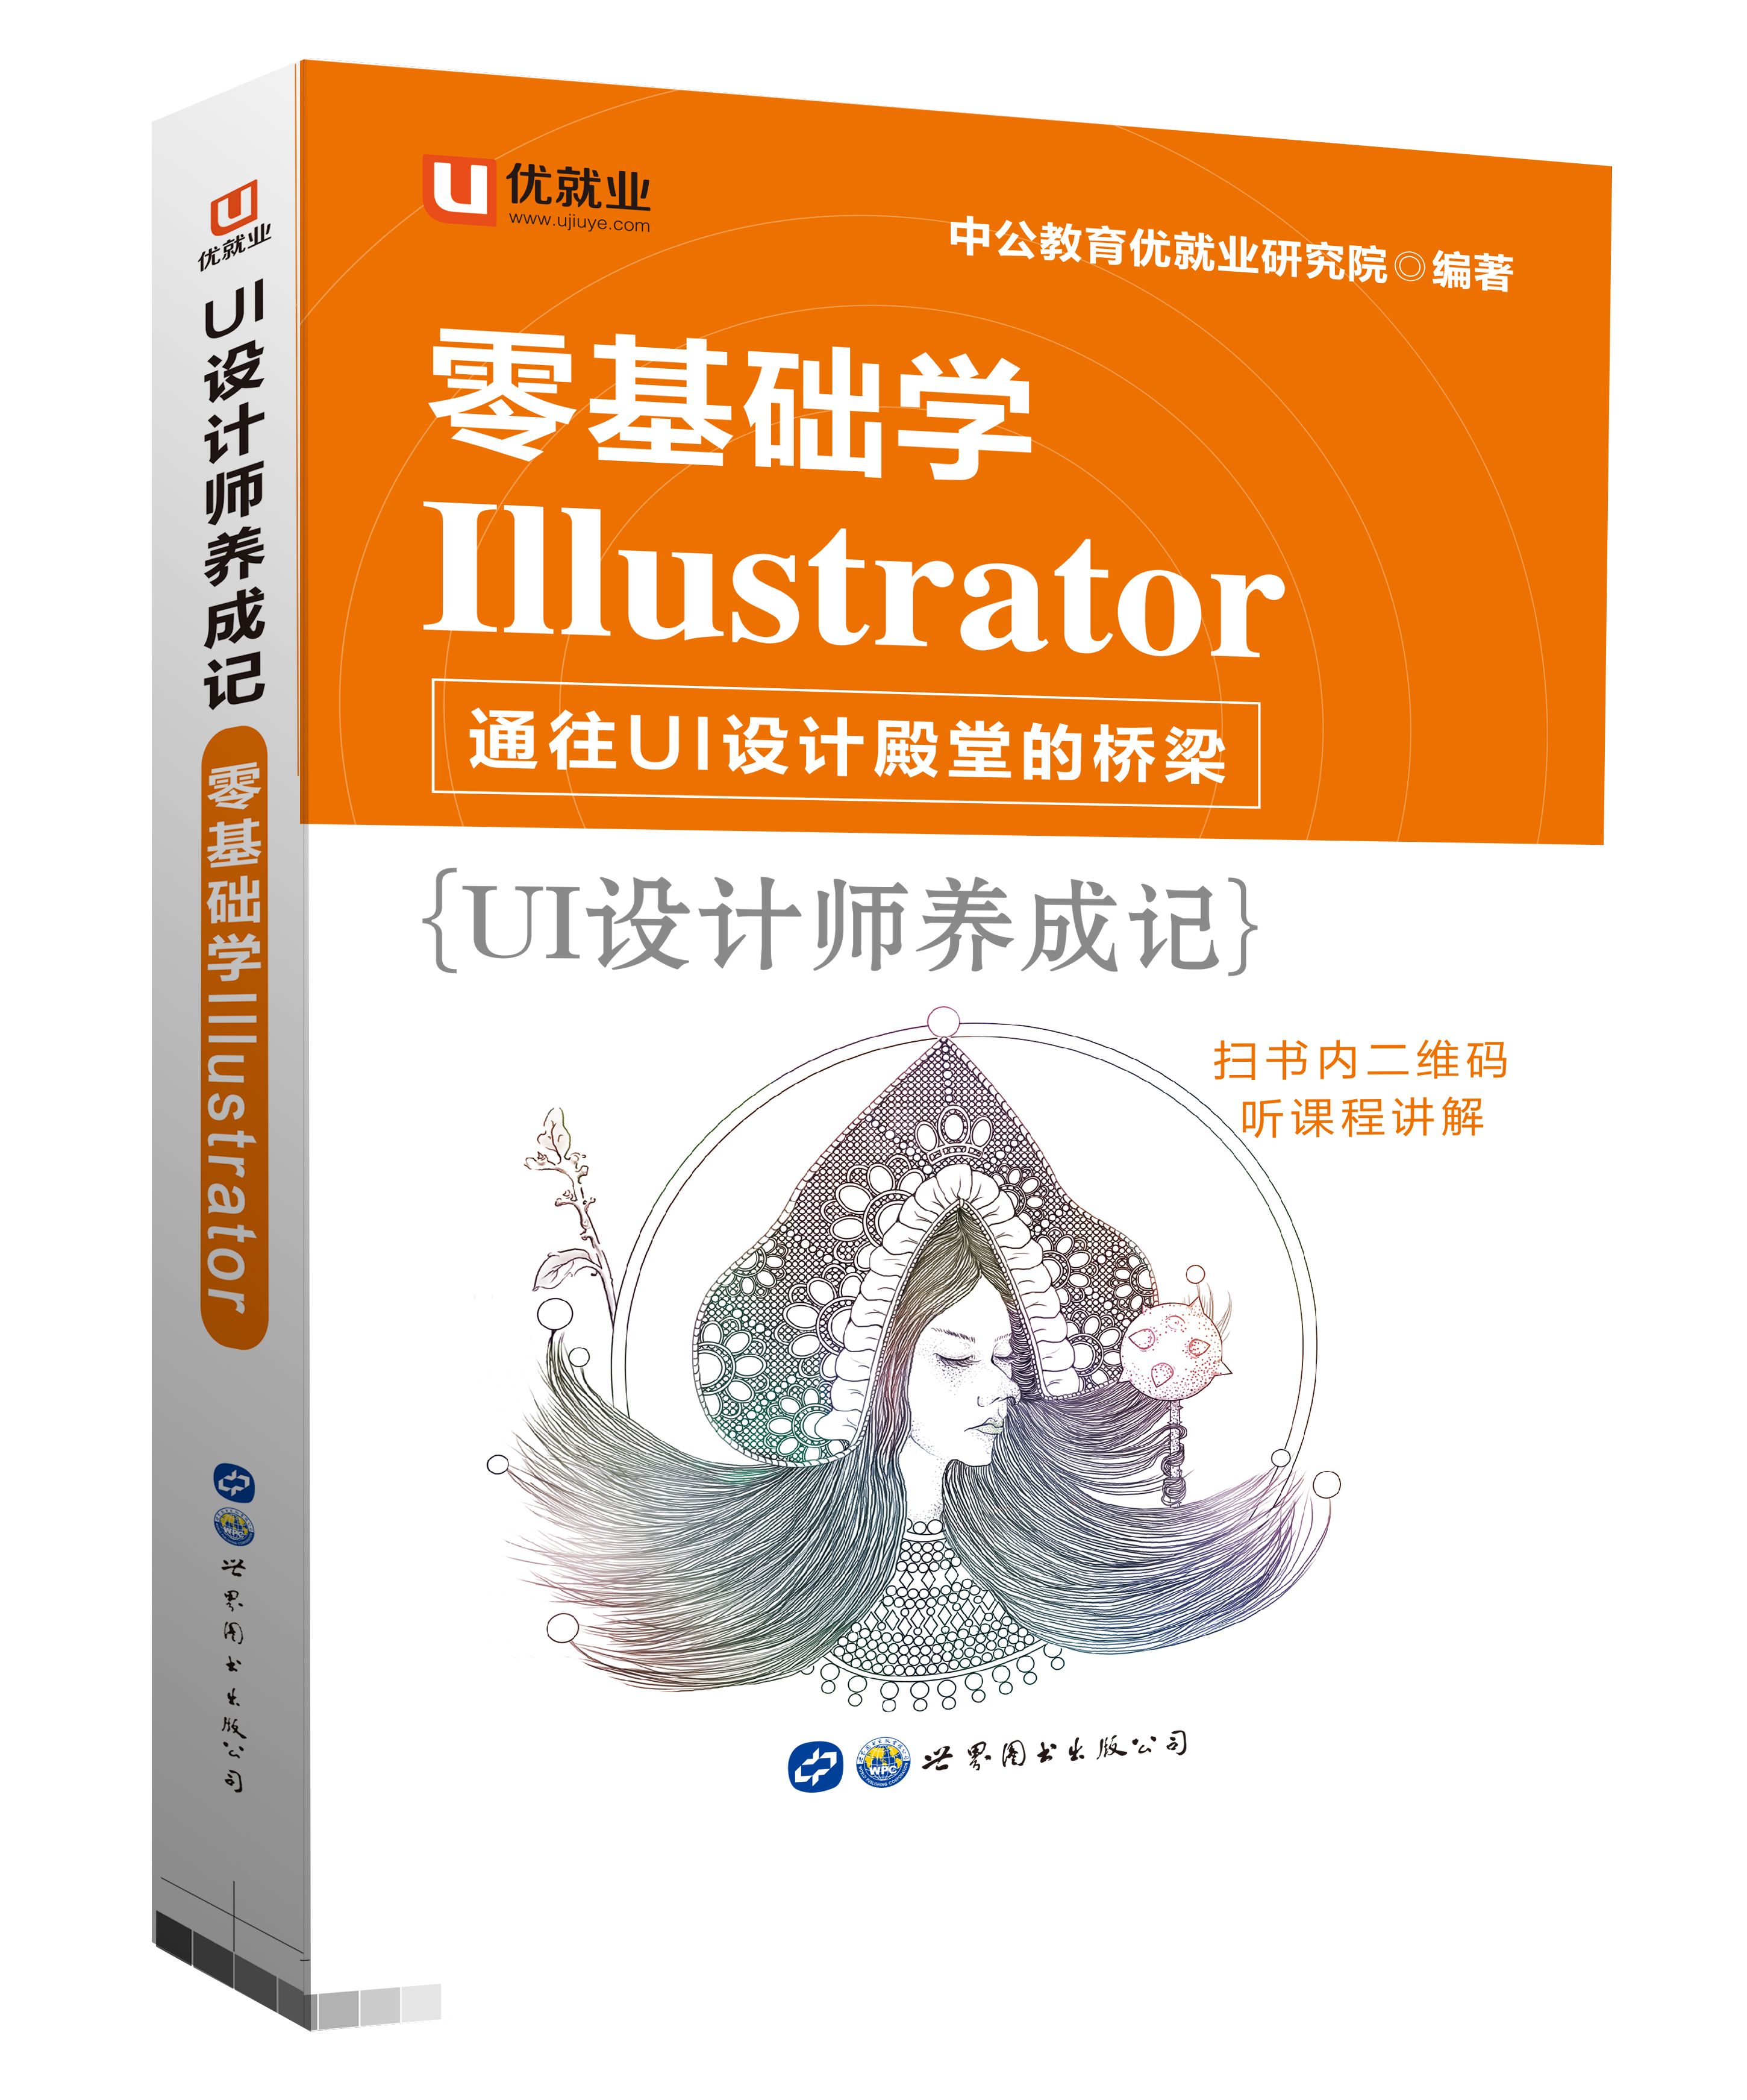 UI設計師養成記·零基礎學Illustrator